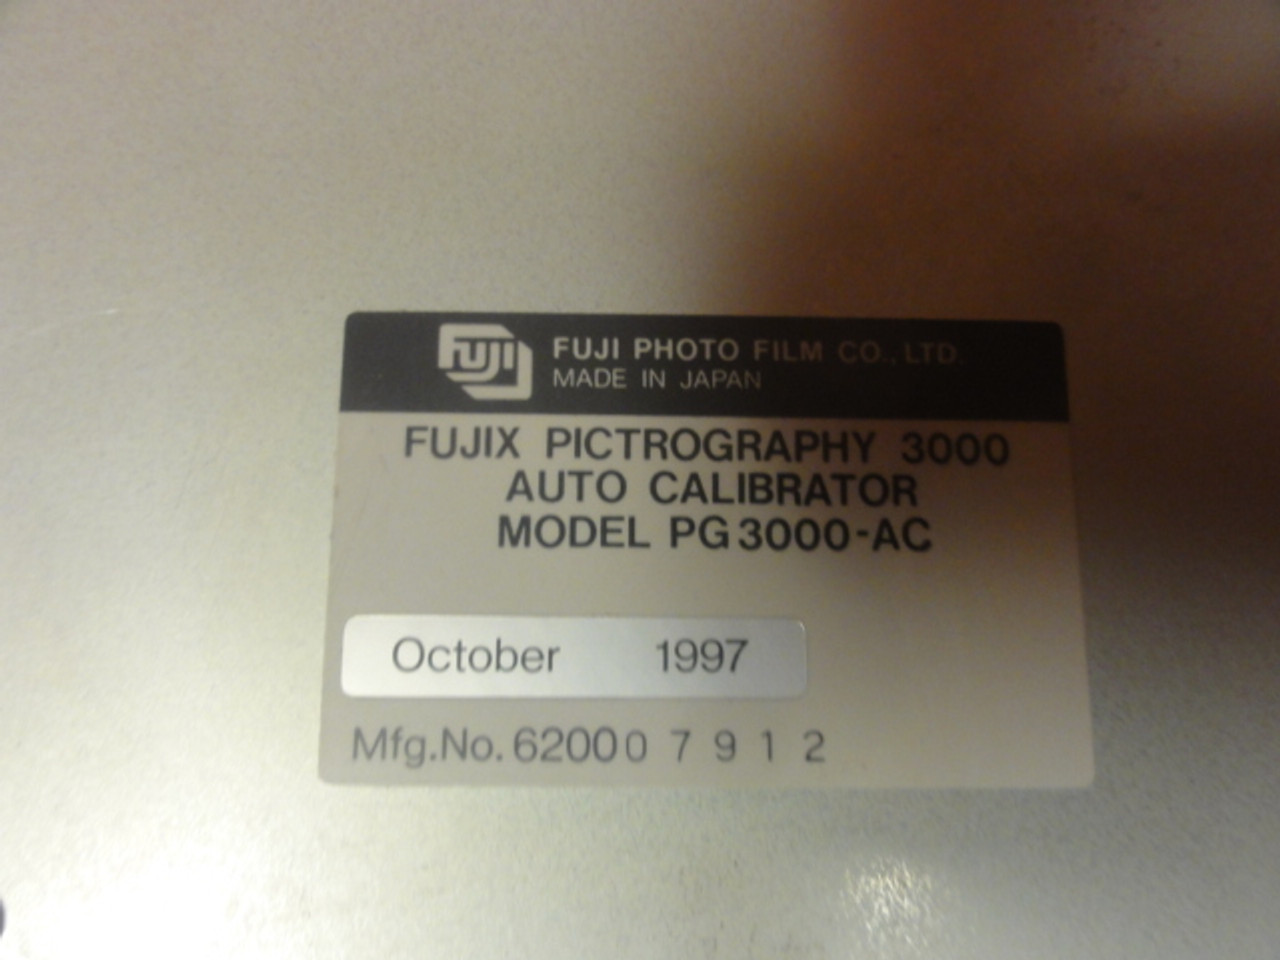 Fujix Pictrography 3000 Model PG3000-AC Auto Calibrator